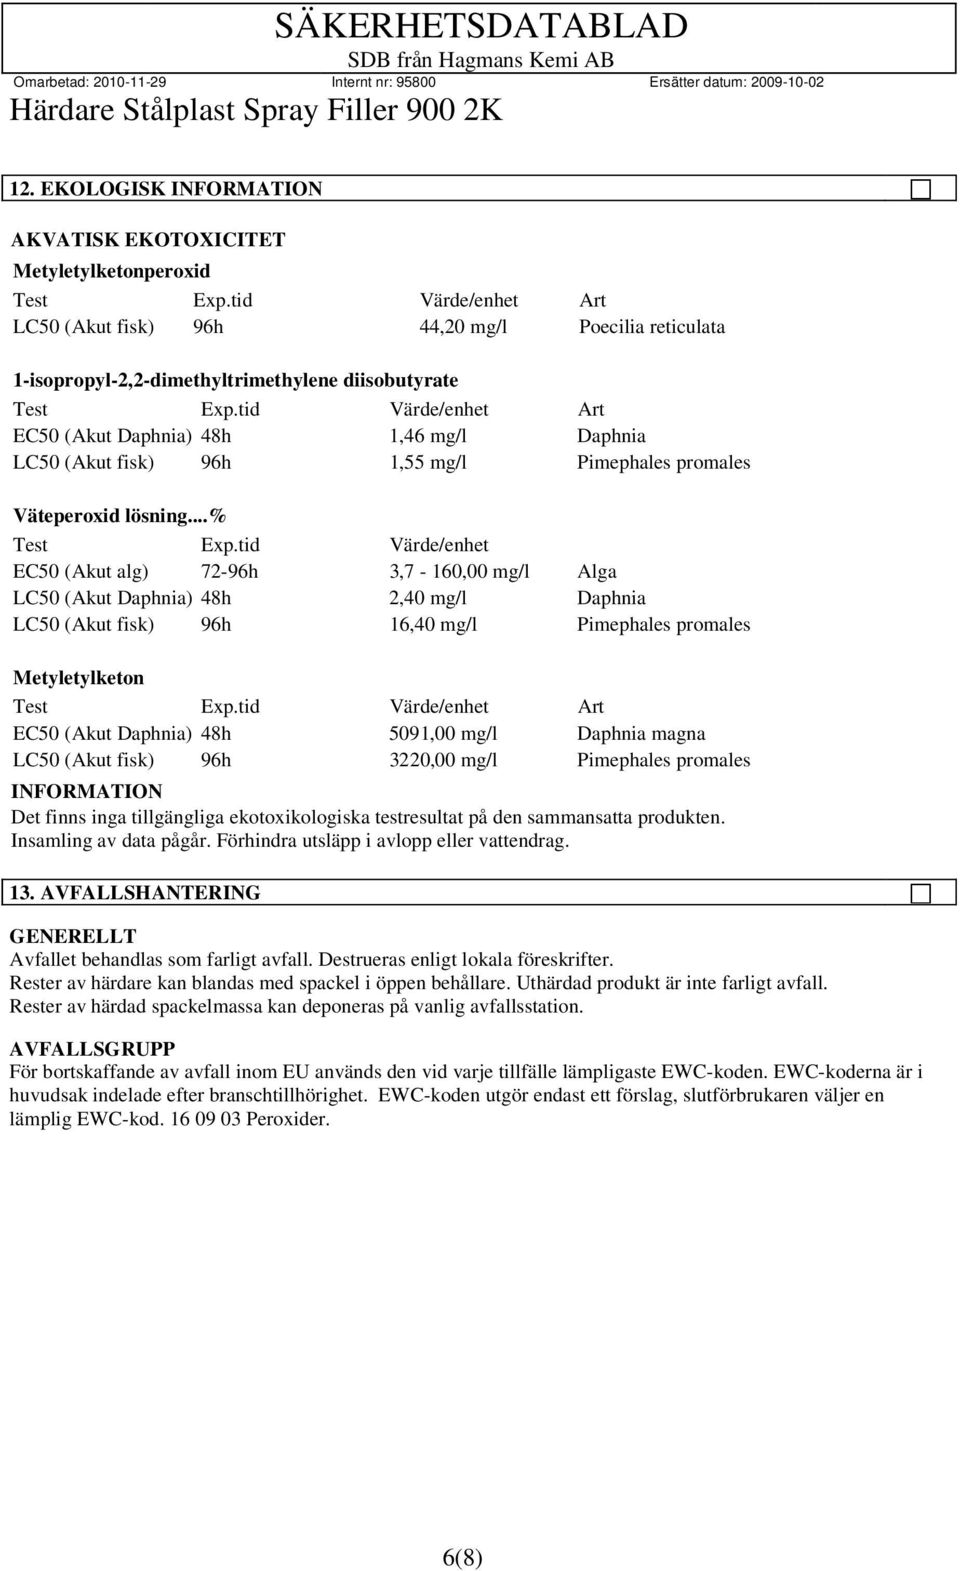 tid Värde/enhet Art EC50 (Akut Daphnia) 48h 1,46 mg/l Daphnia LC50 (Akut fisk) 96h 1,55 mg/l Pimephales promales Väteperoxid lösning...% Test Exp.